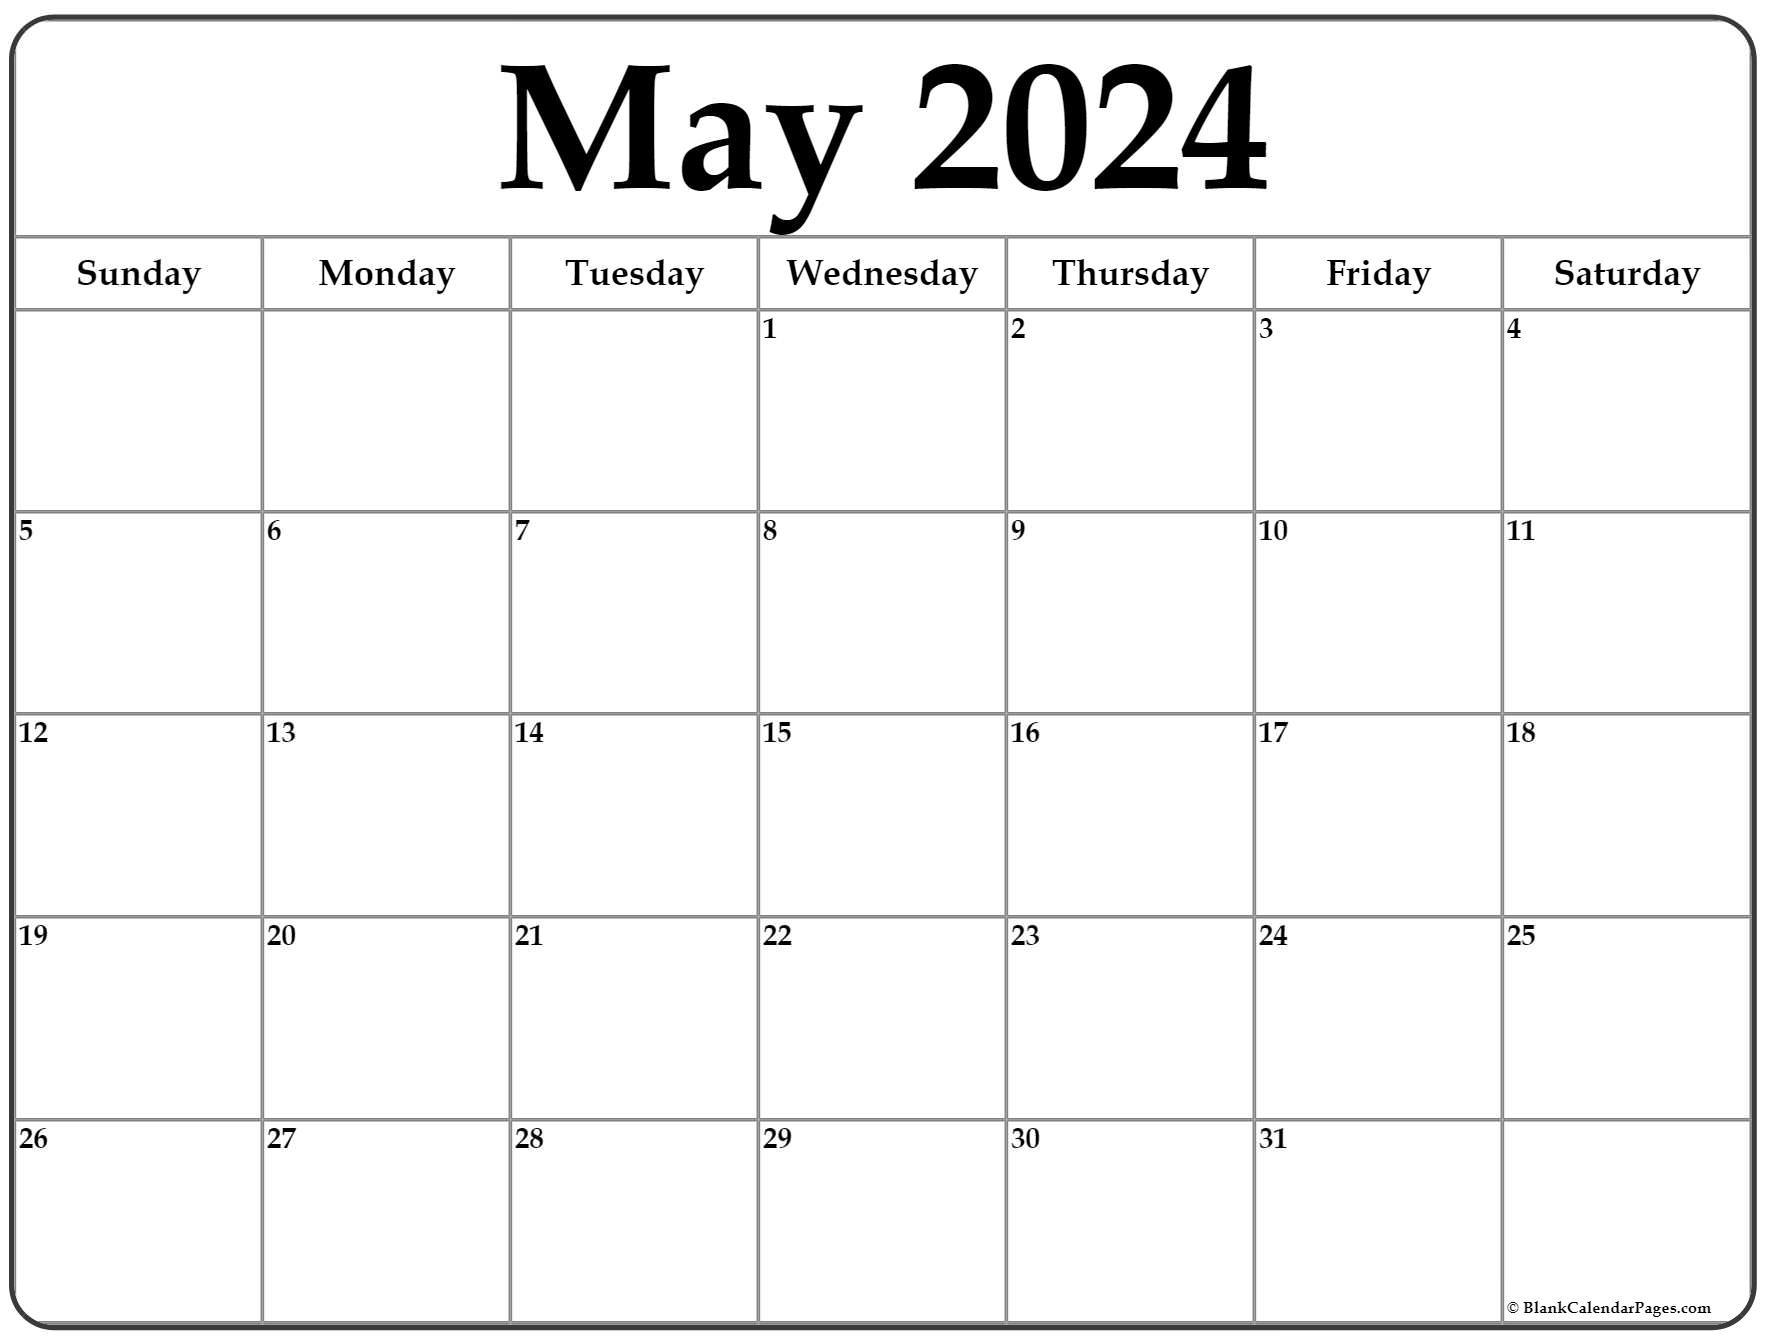 May 2024 Calendar | Free Printable Calendar | Free Printable Calendar 2024 May